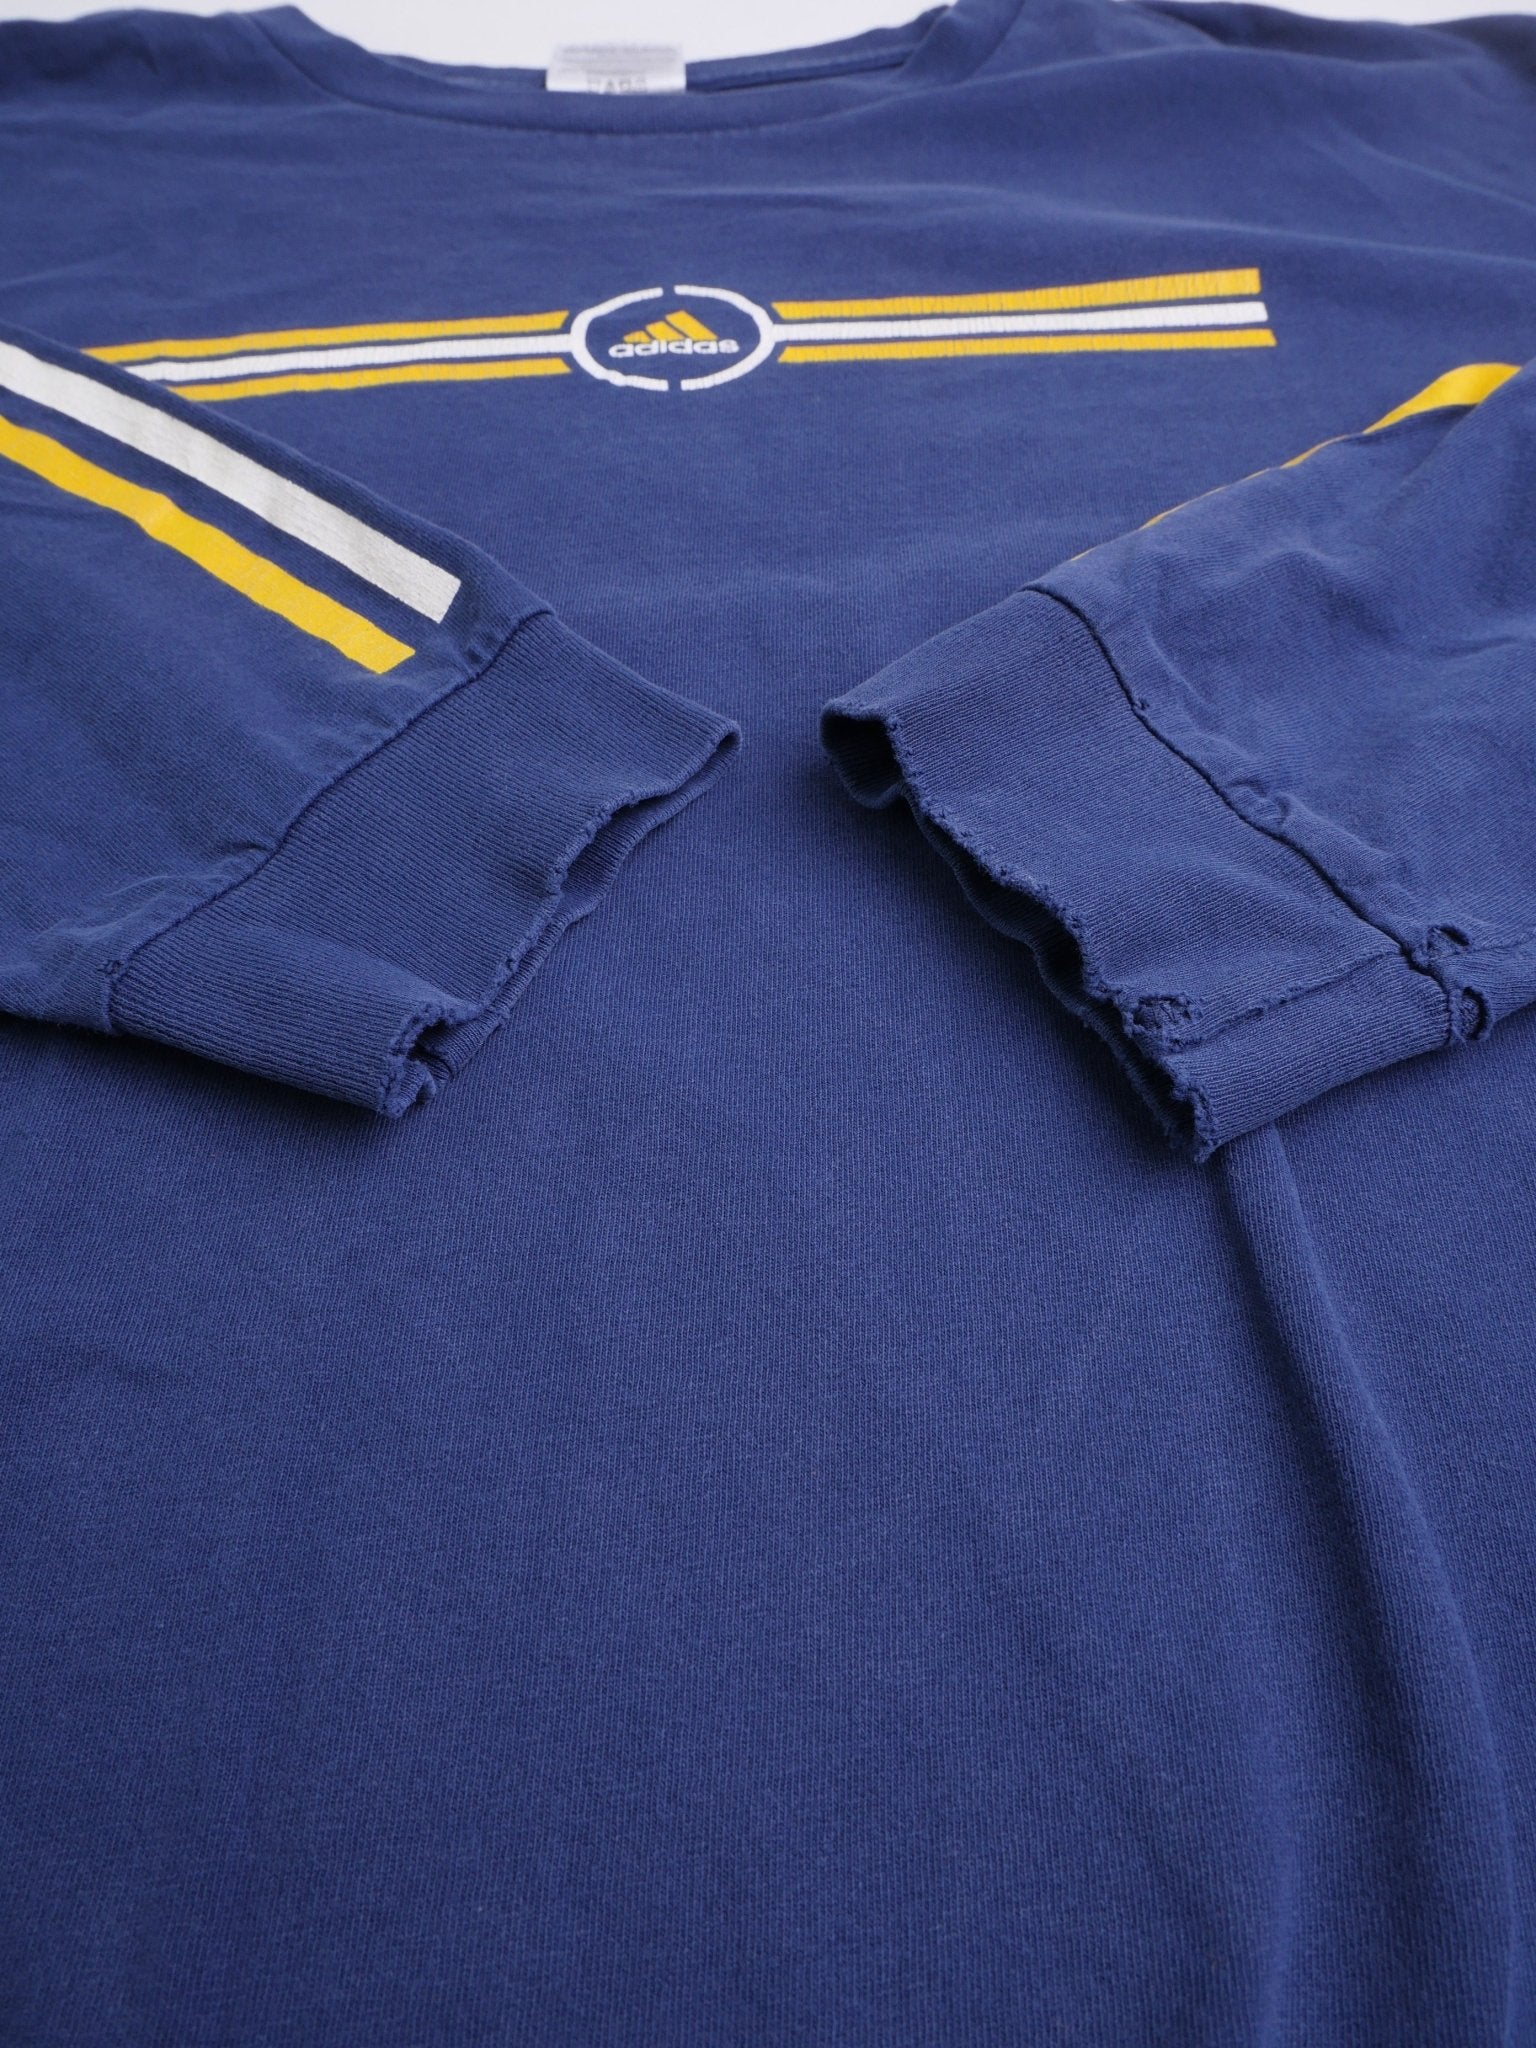 Adidas printed Logo navy L/S Shirt - Peeces